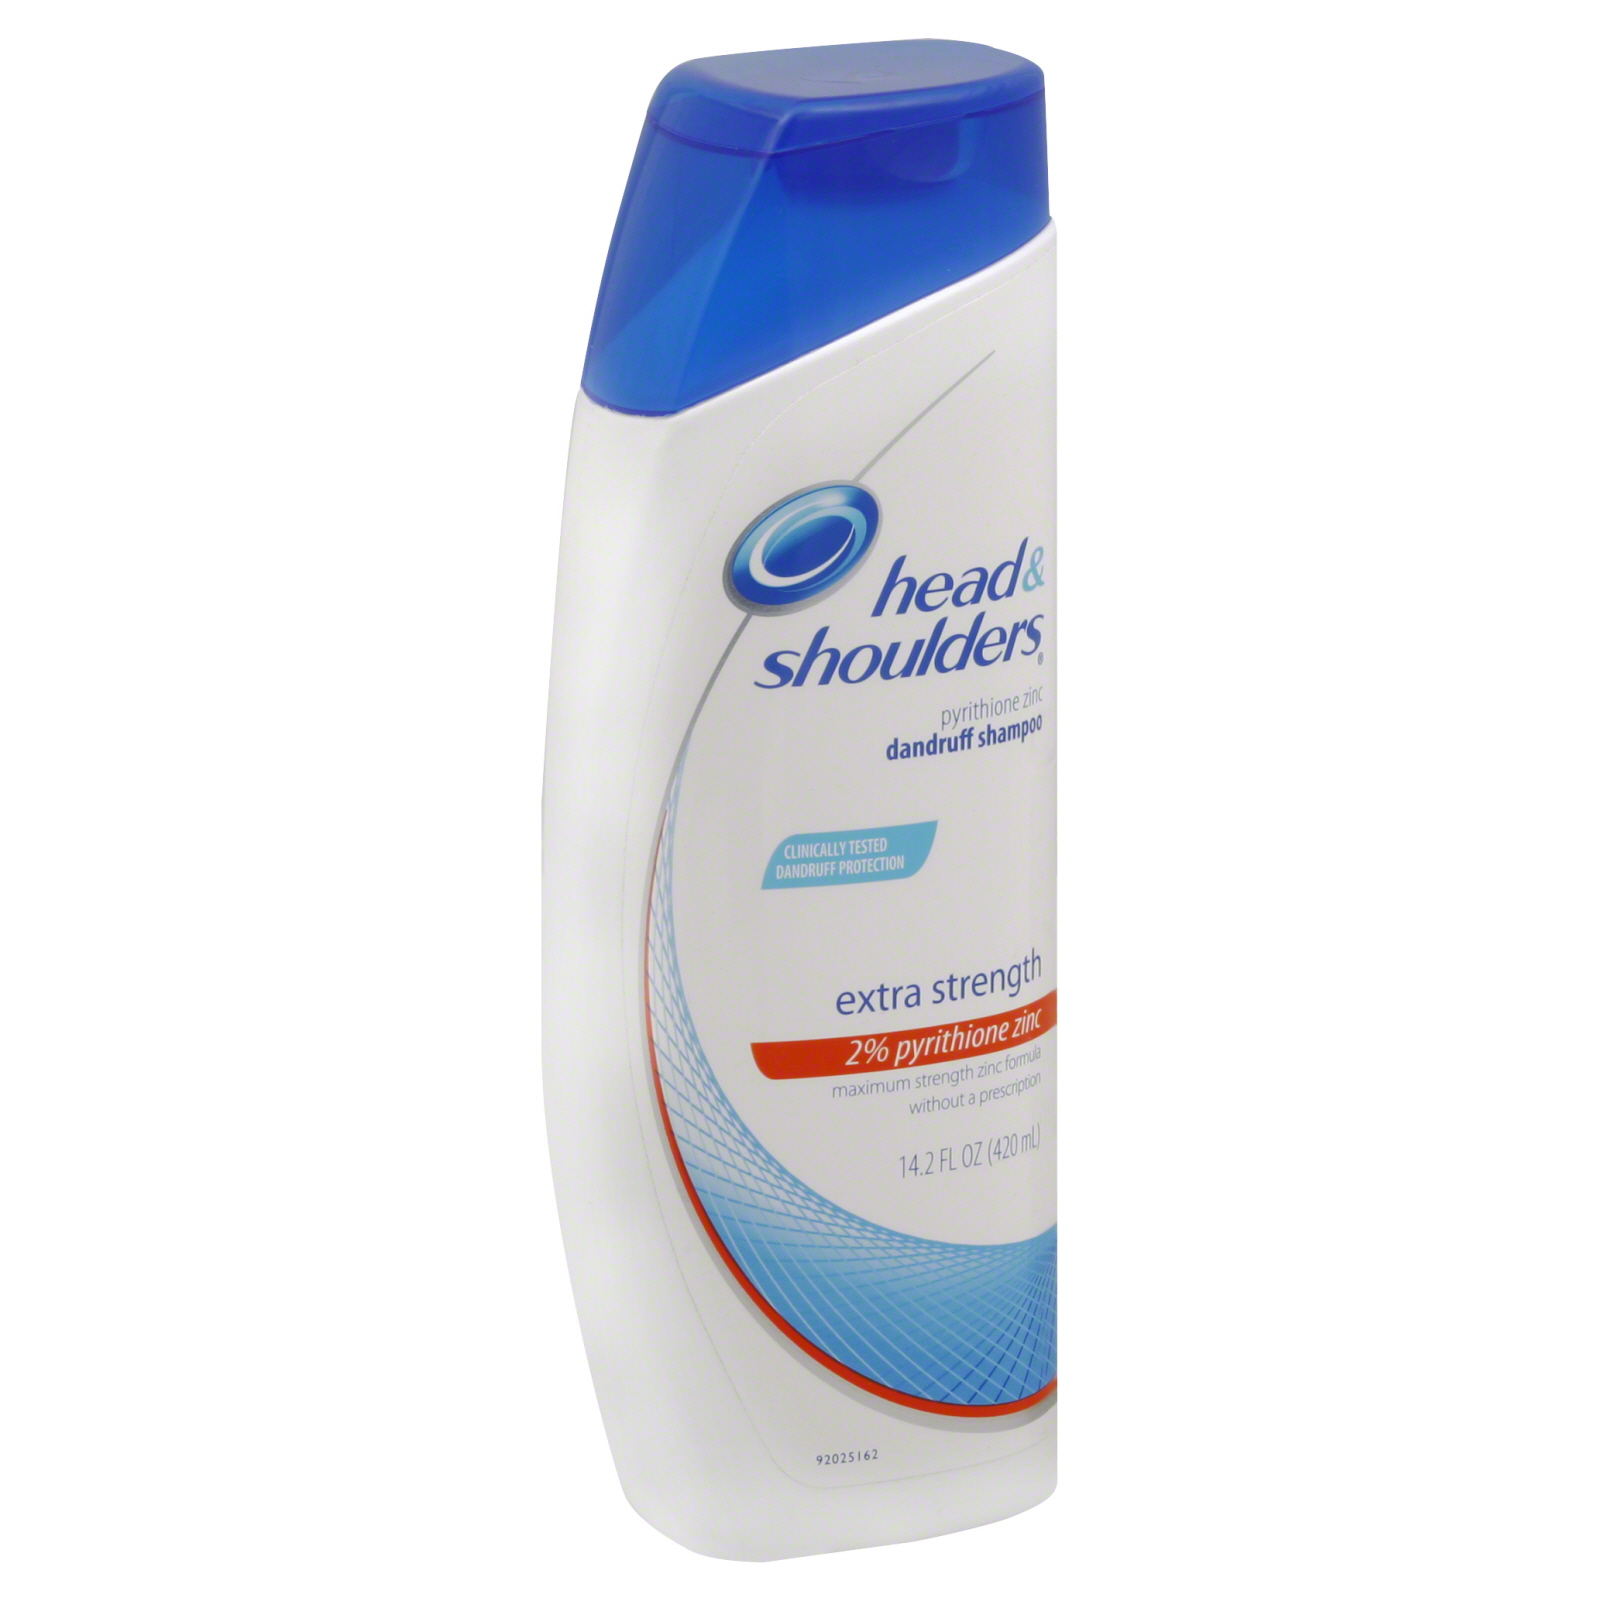 Head & Shoulders Extra Strength Dandruff Shampoo, 14.2 fl oz (420 ml)